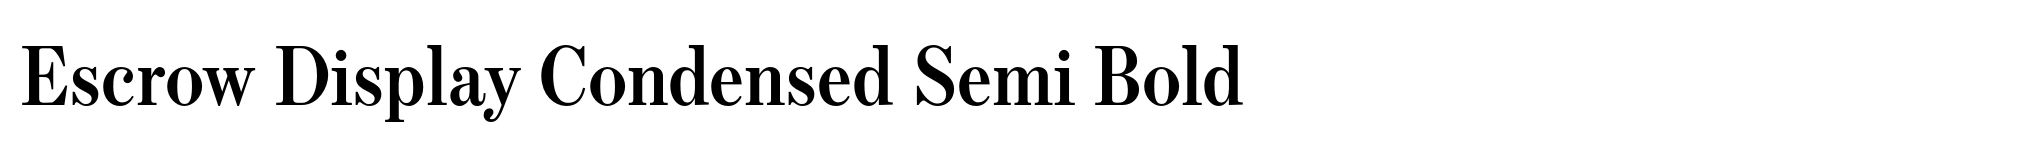 Escrow Display Condensed Semi Bold image